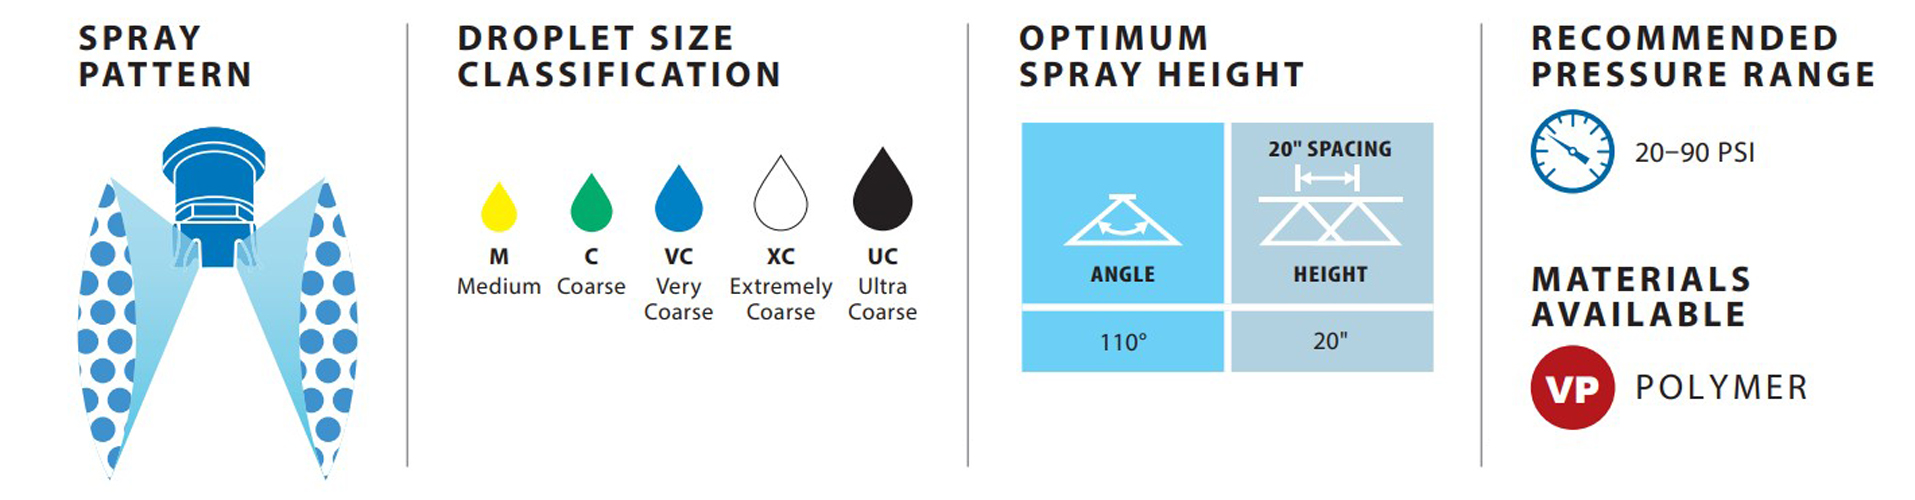 AITTJ60 spray tip performance details